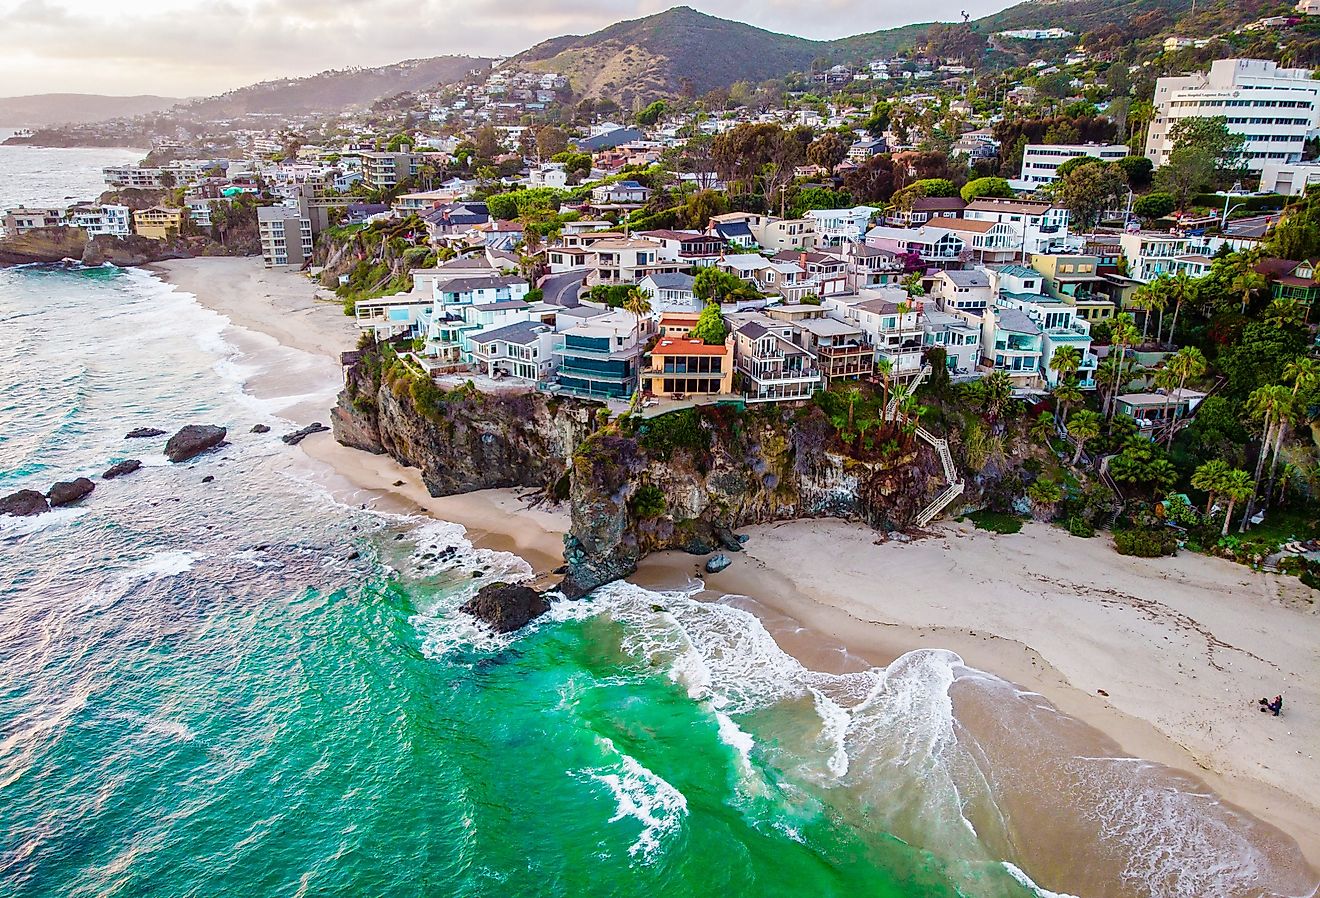 Aerial view of luxury buildings at the coast of Laguna Beach, California.